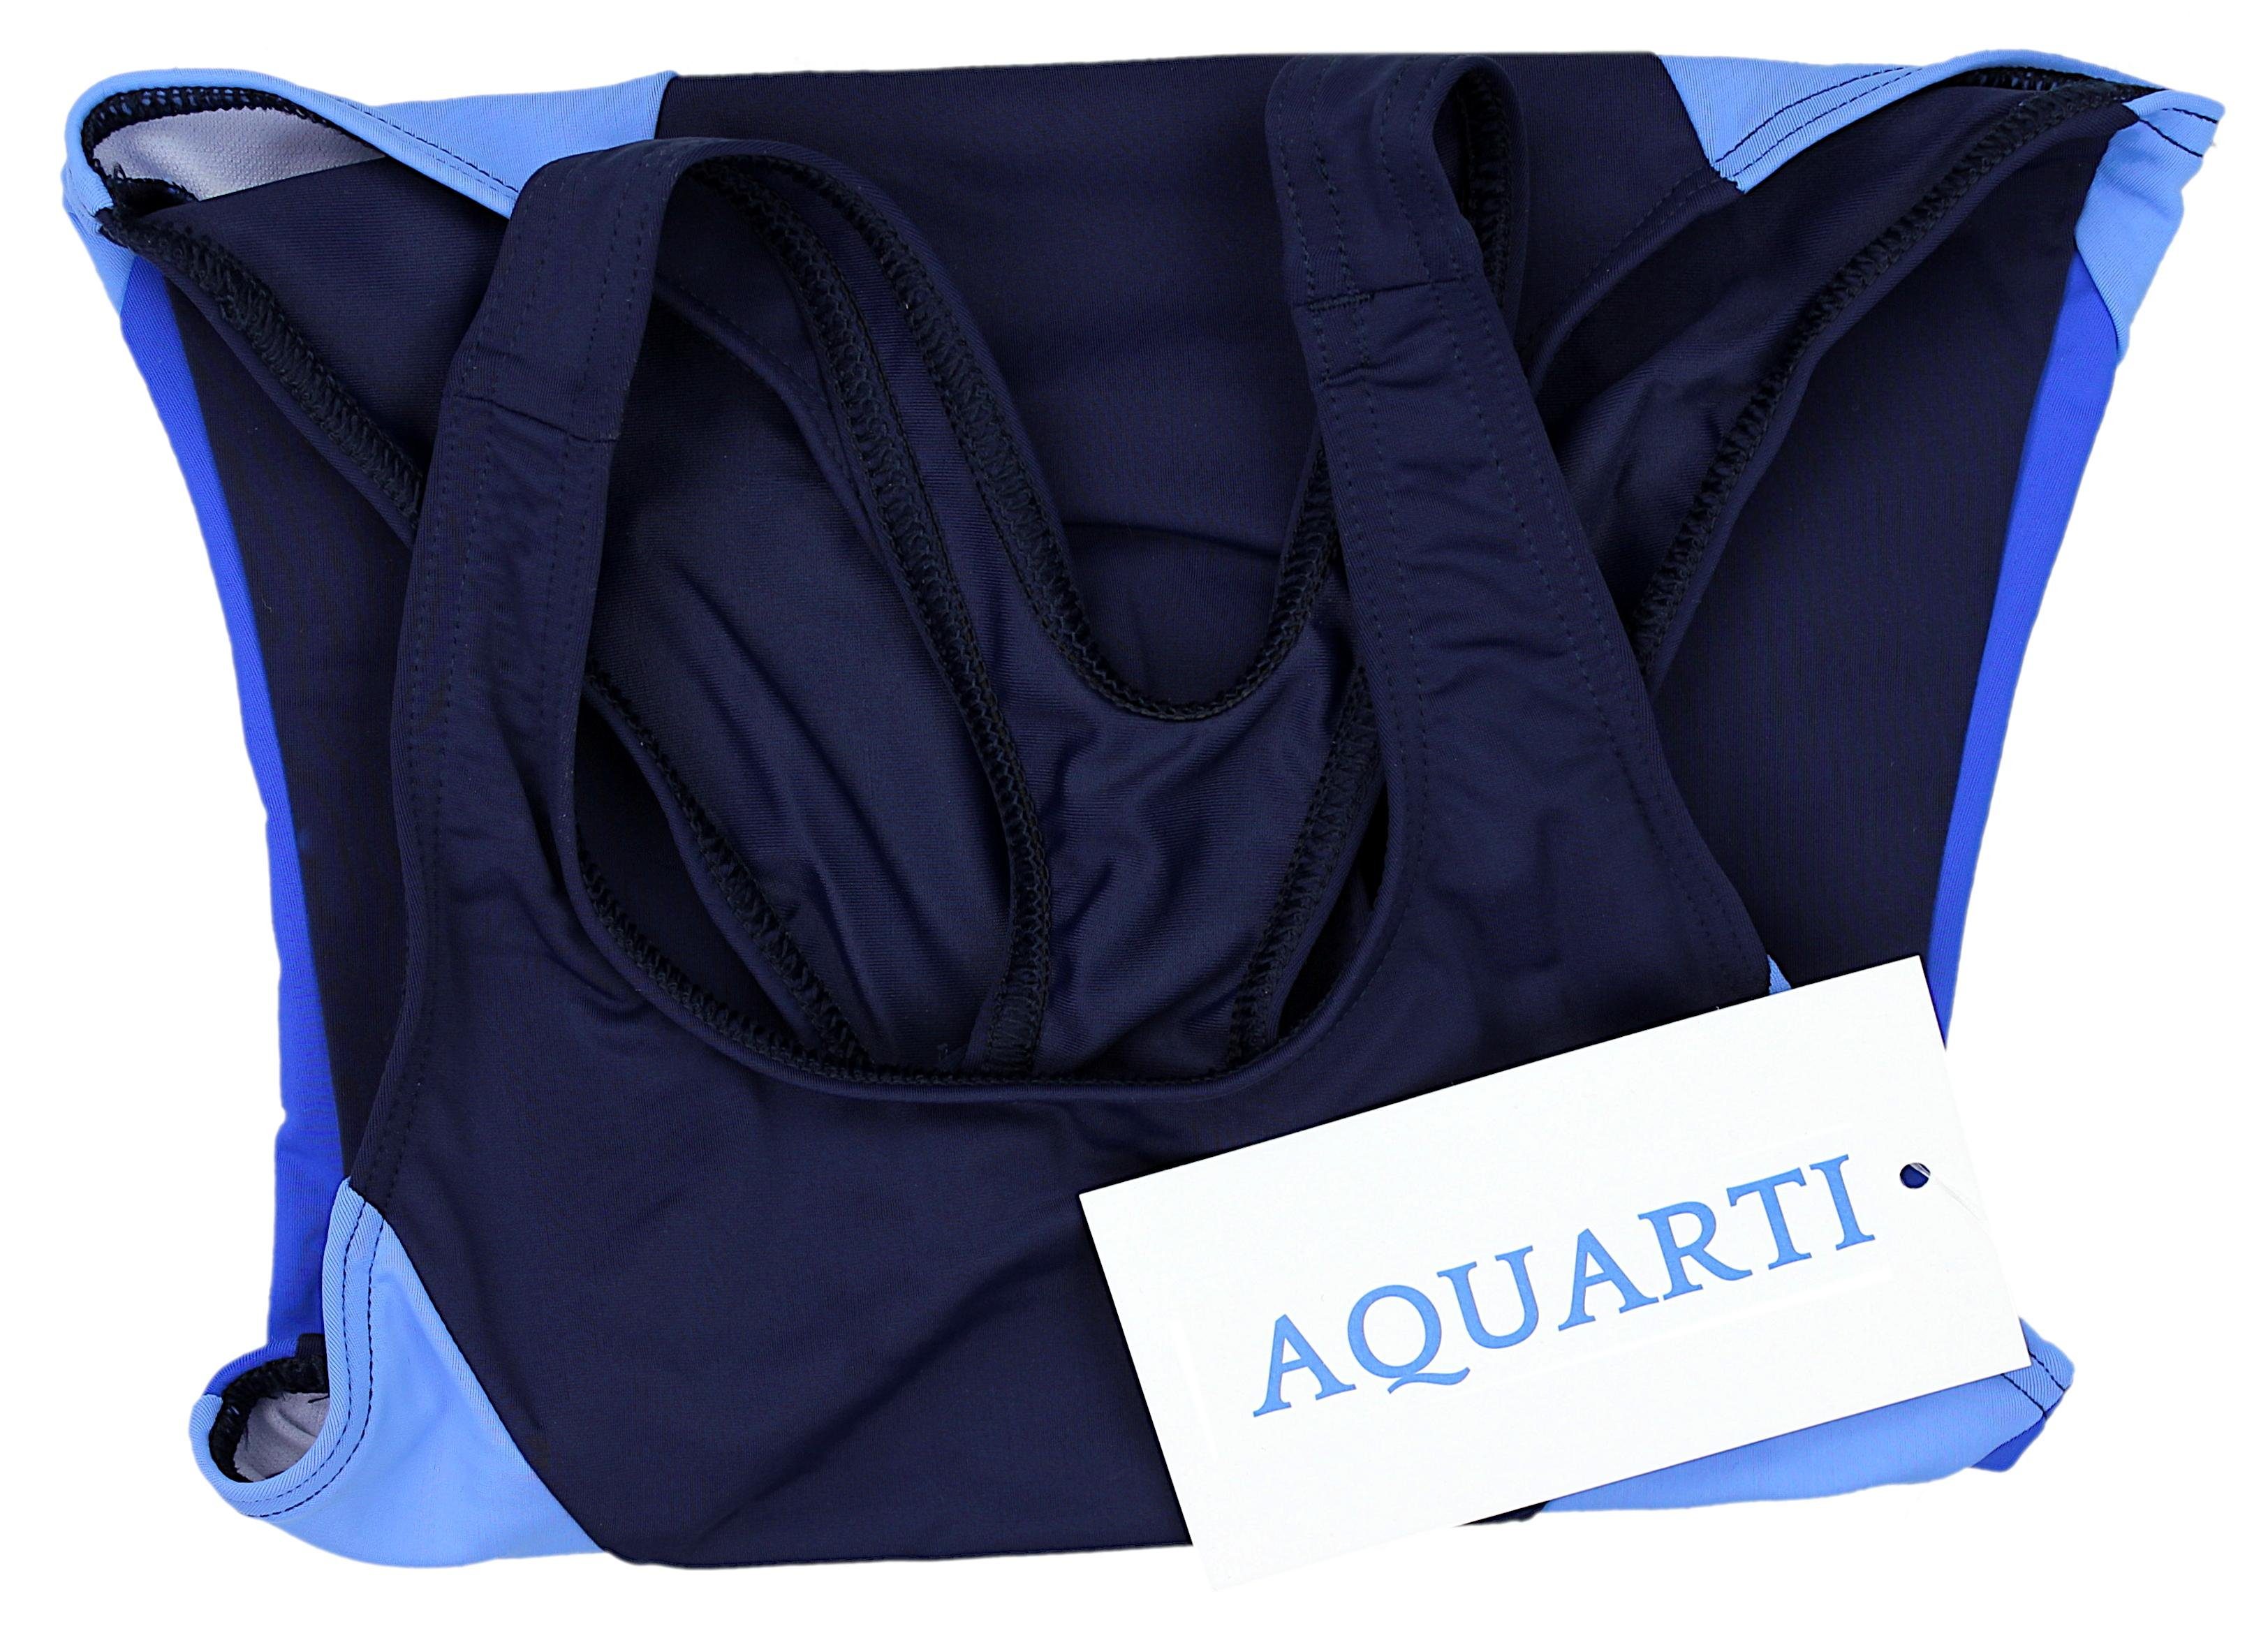 / S-1218 Aquarti mit Mädchen Badeanzug Aquarti Ringerrücken Blau Dunkelblau Badeanzug C